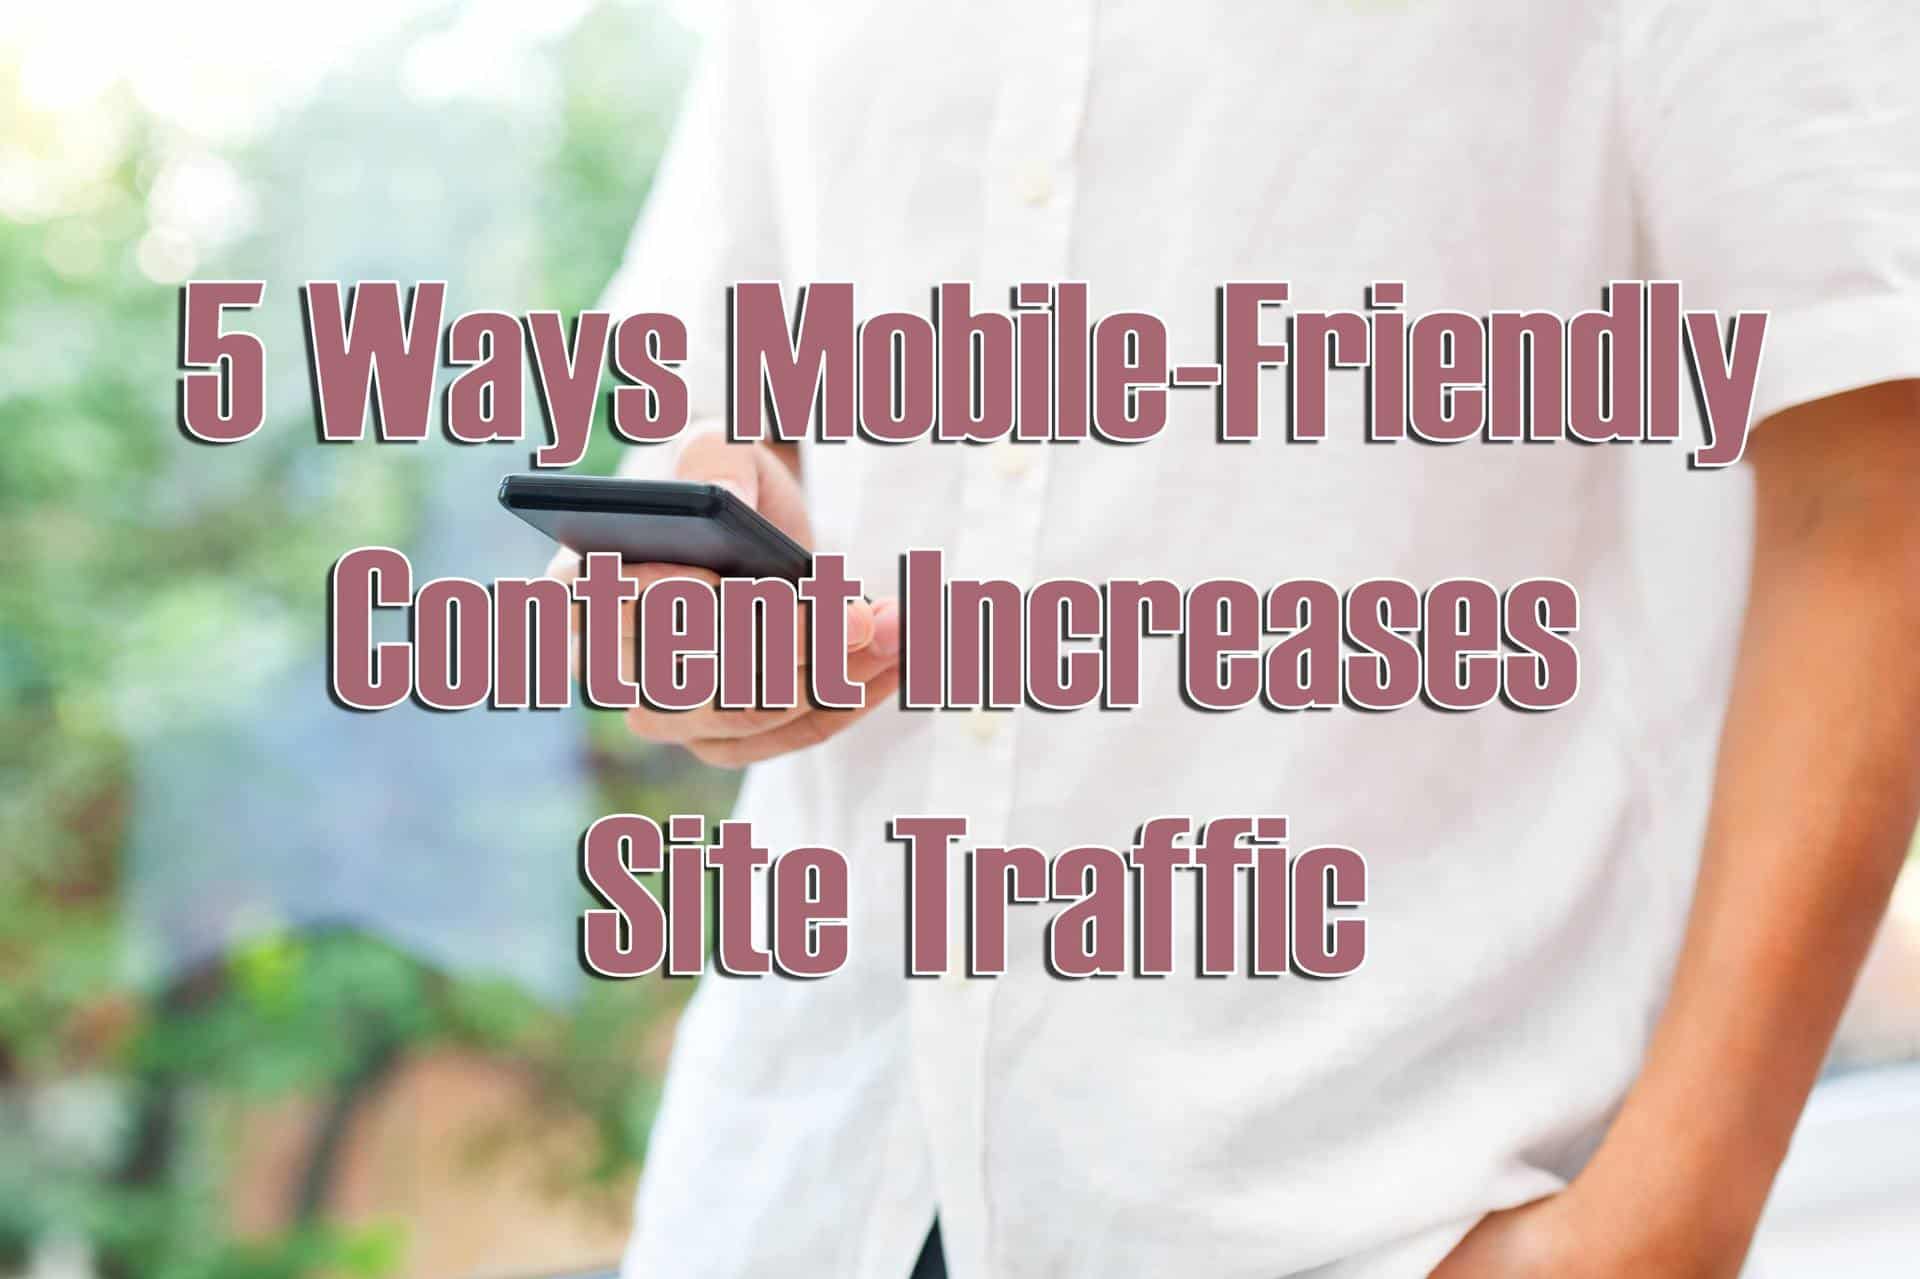 Mobile-Friendly Content